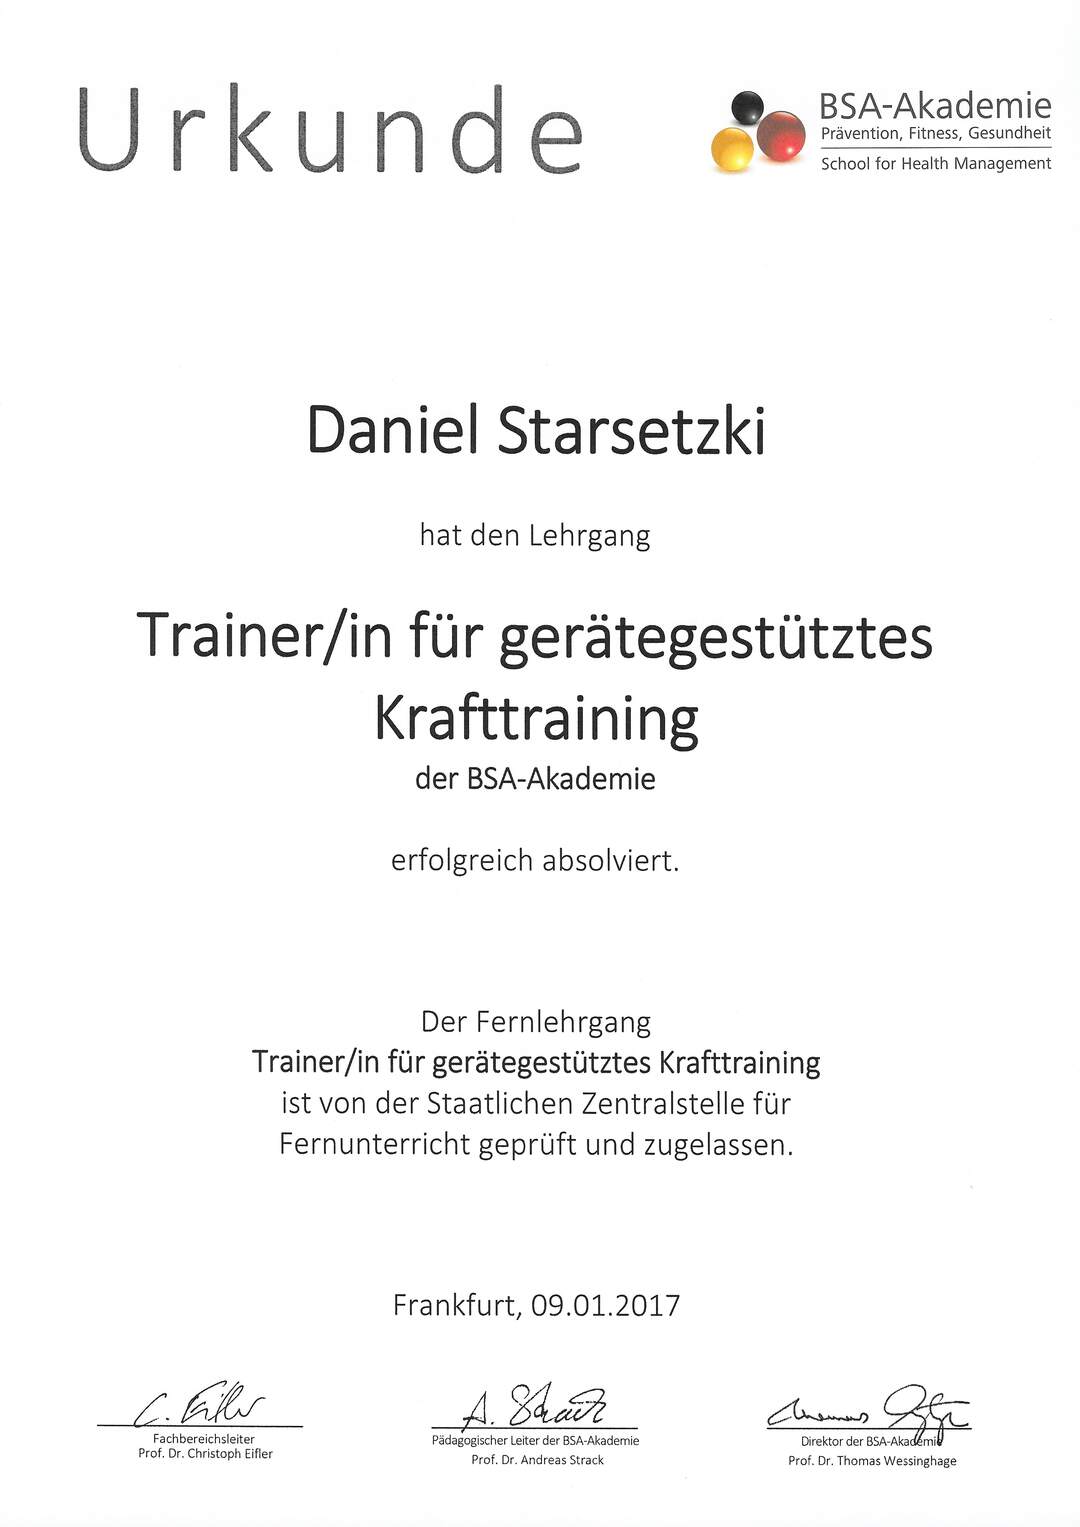 Daniel Starsetzki Trainer für gerätegestütztes Krafttraining Karlsruhe